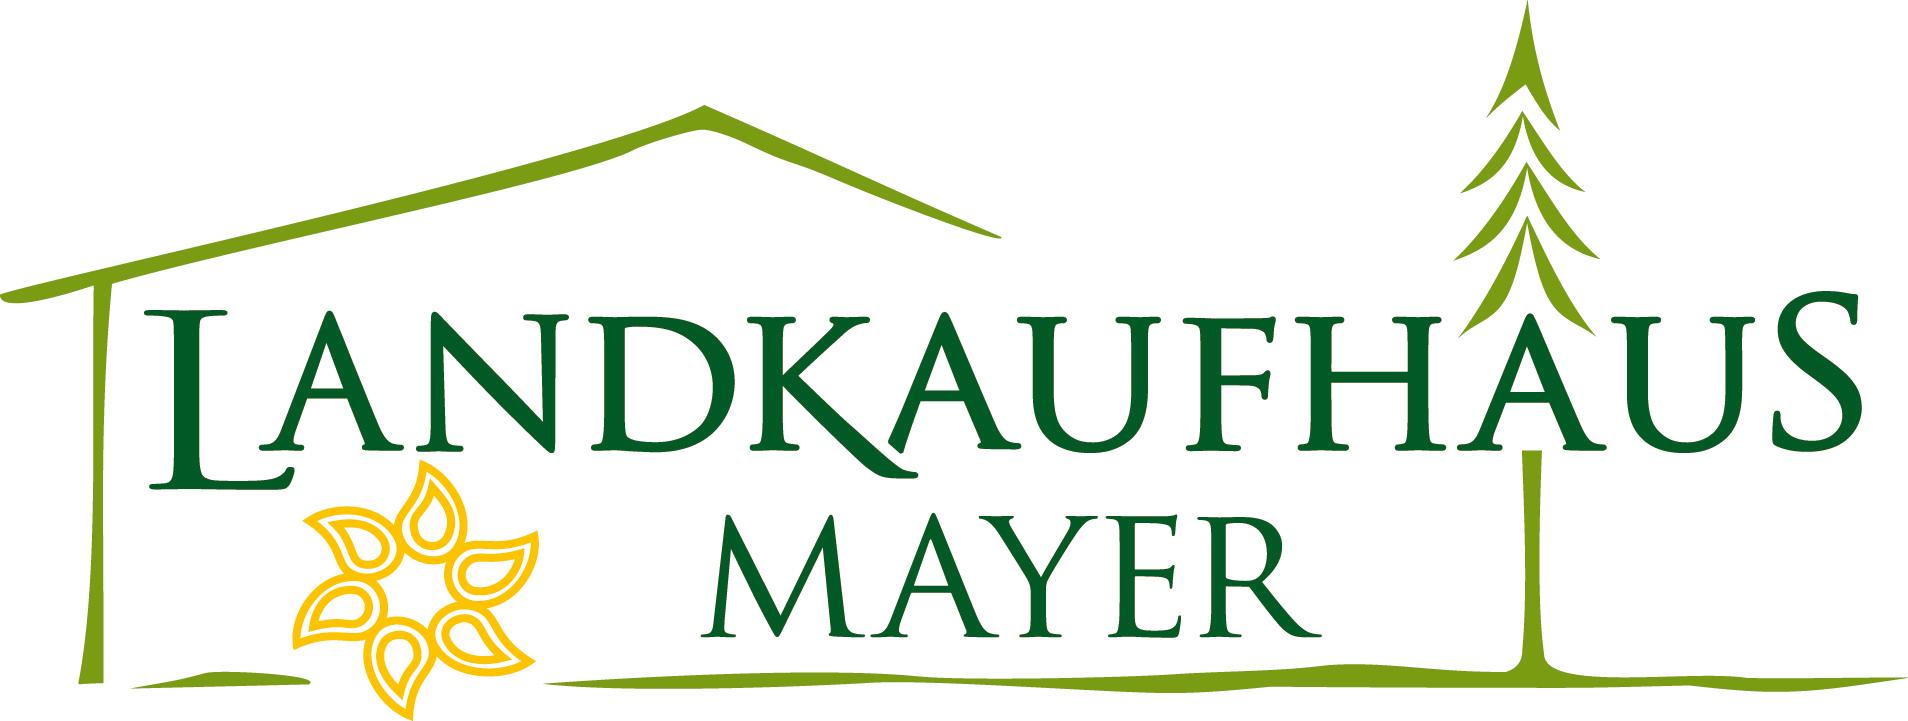 Landkaufhaus Mayer GmbH